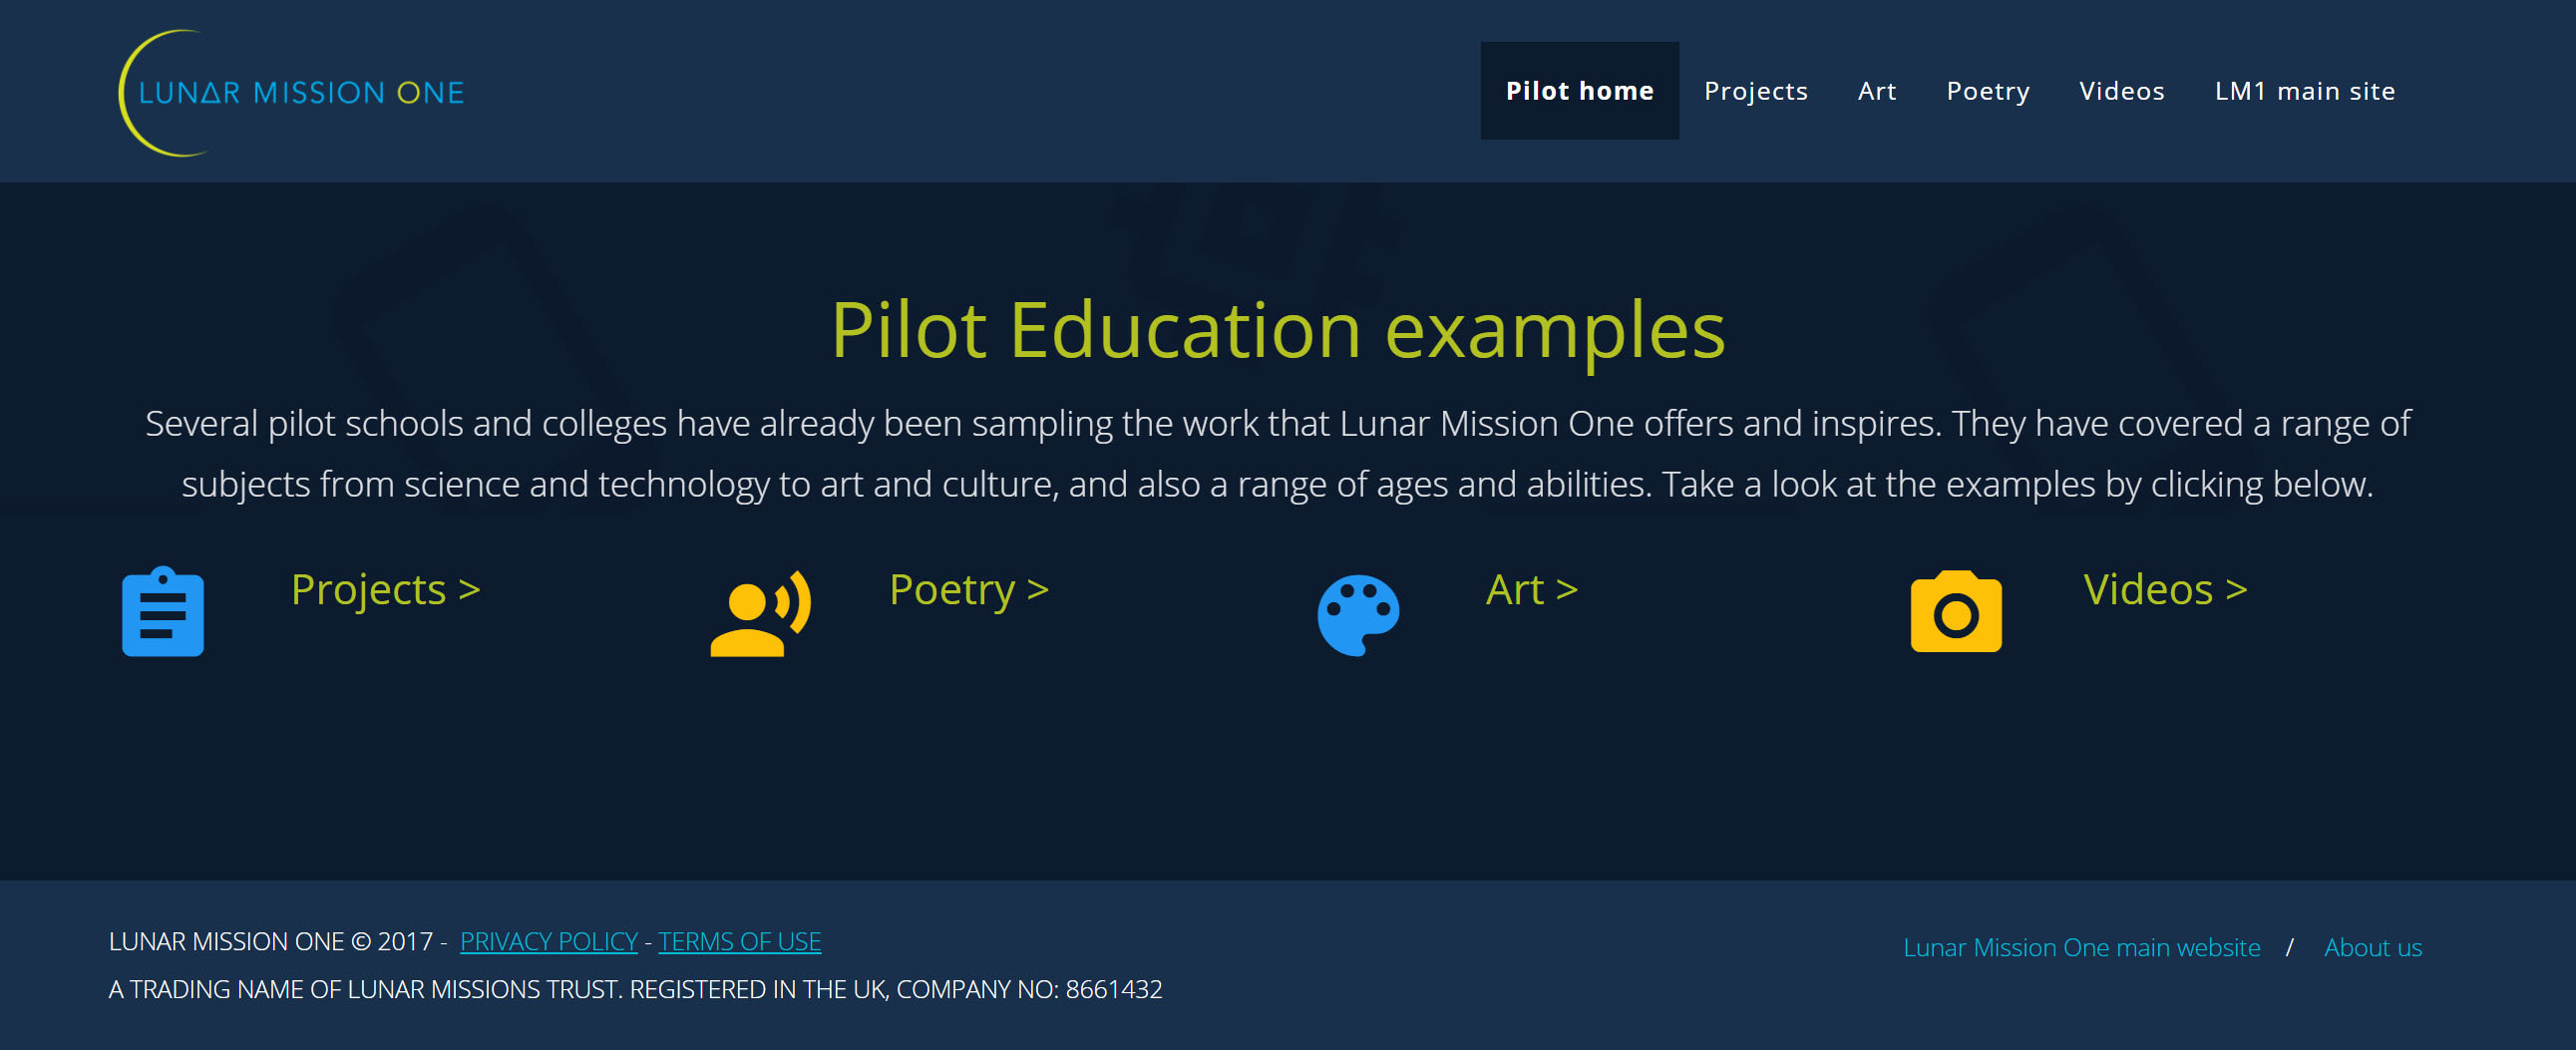 Pilot Education examples site